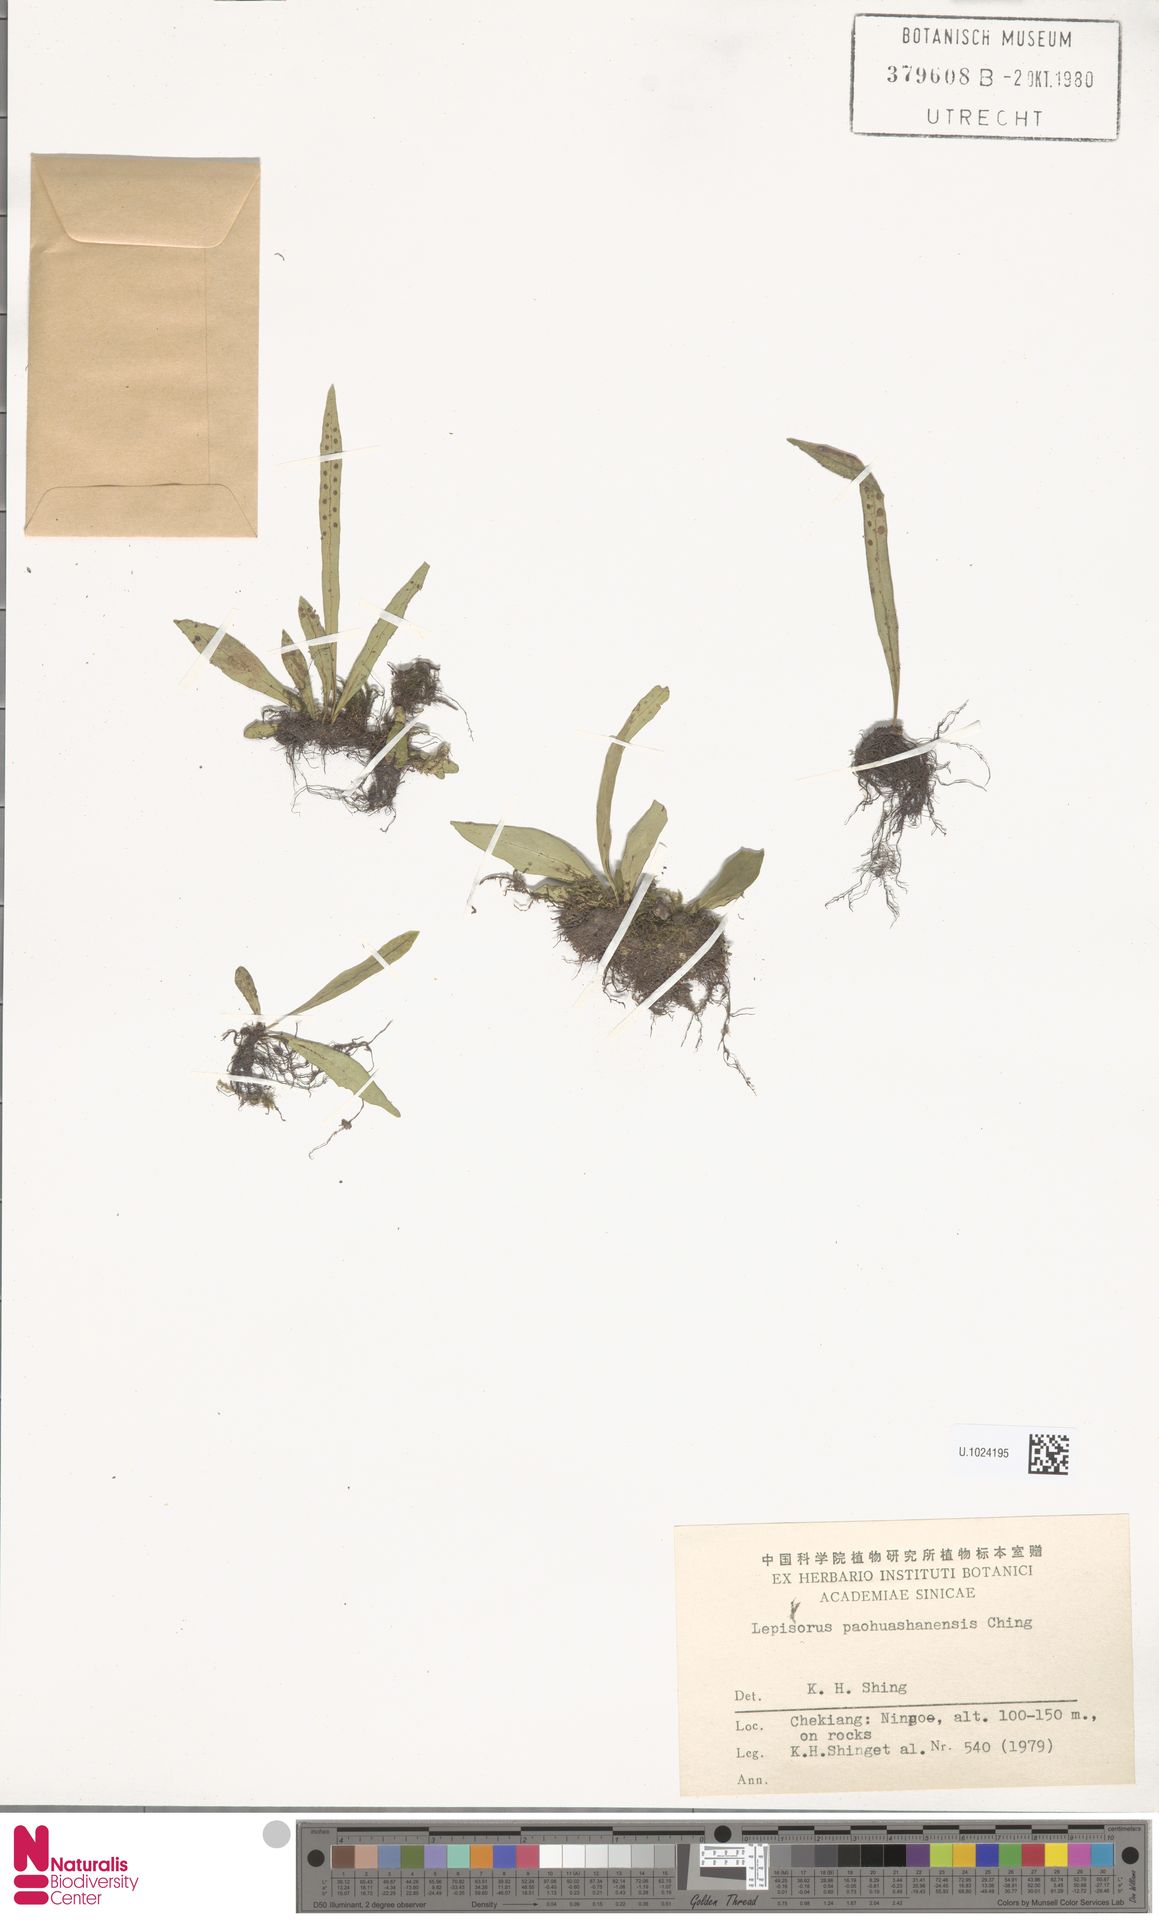 Lepisorus tosaensis image